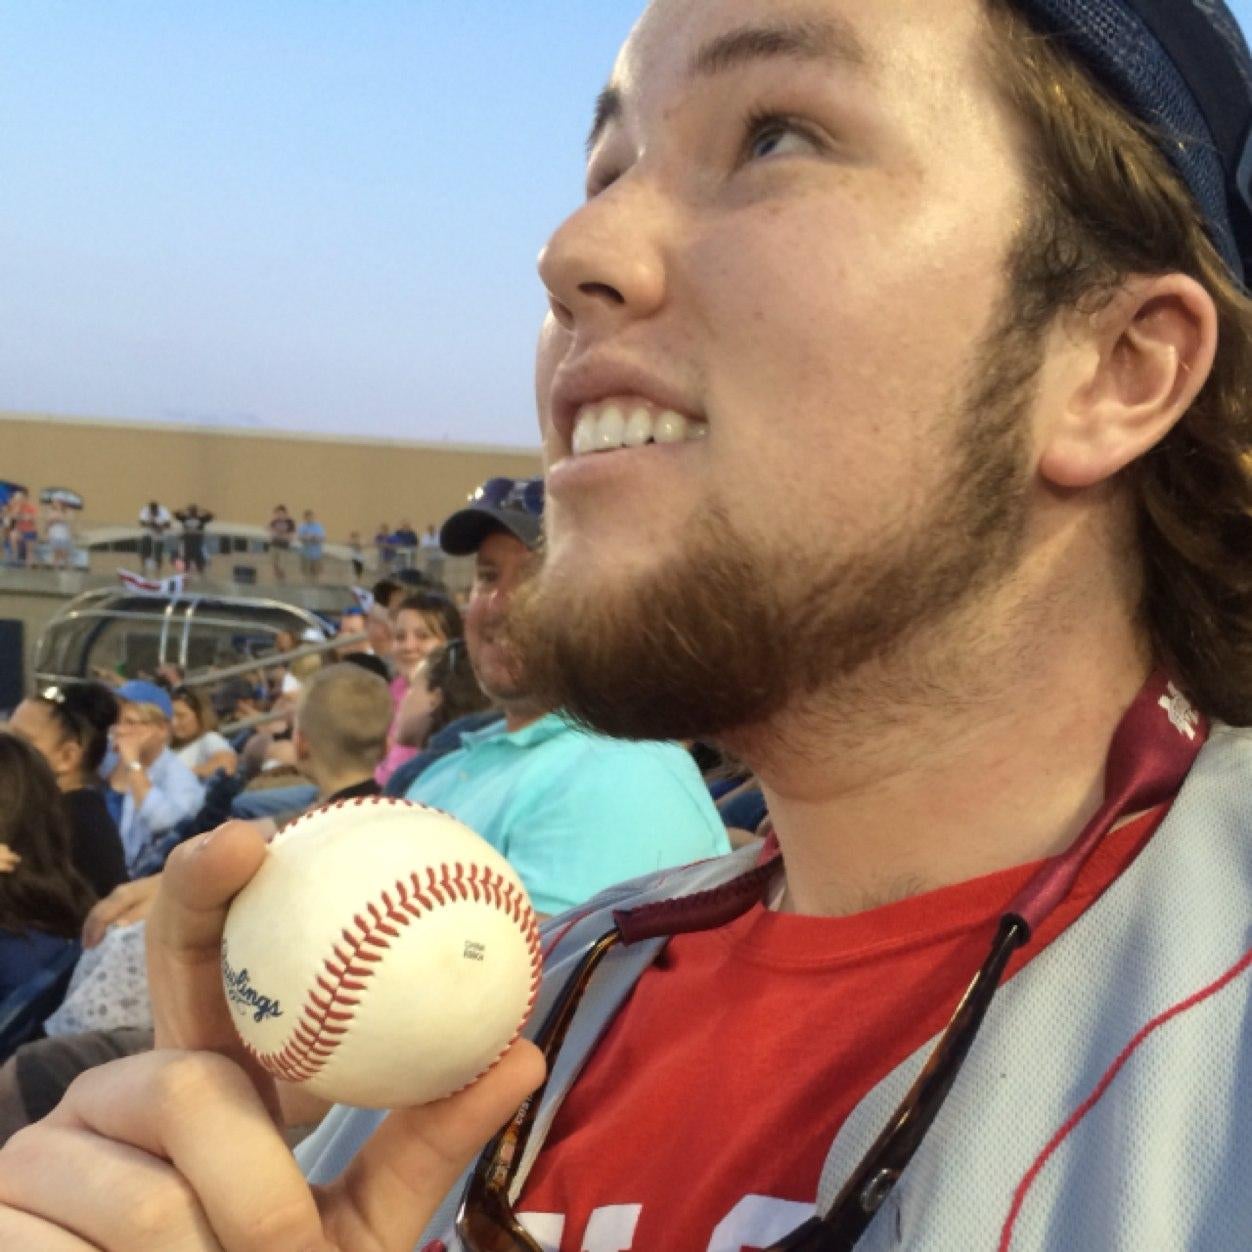 Baseball fan Mich Graves filmed himself catching a brilliant foul ball